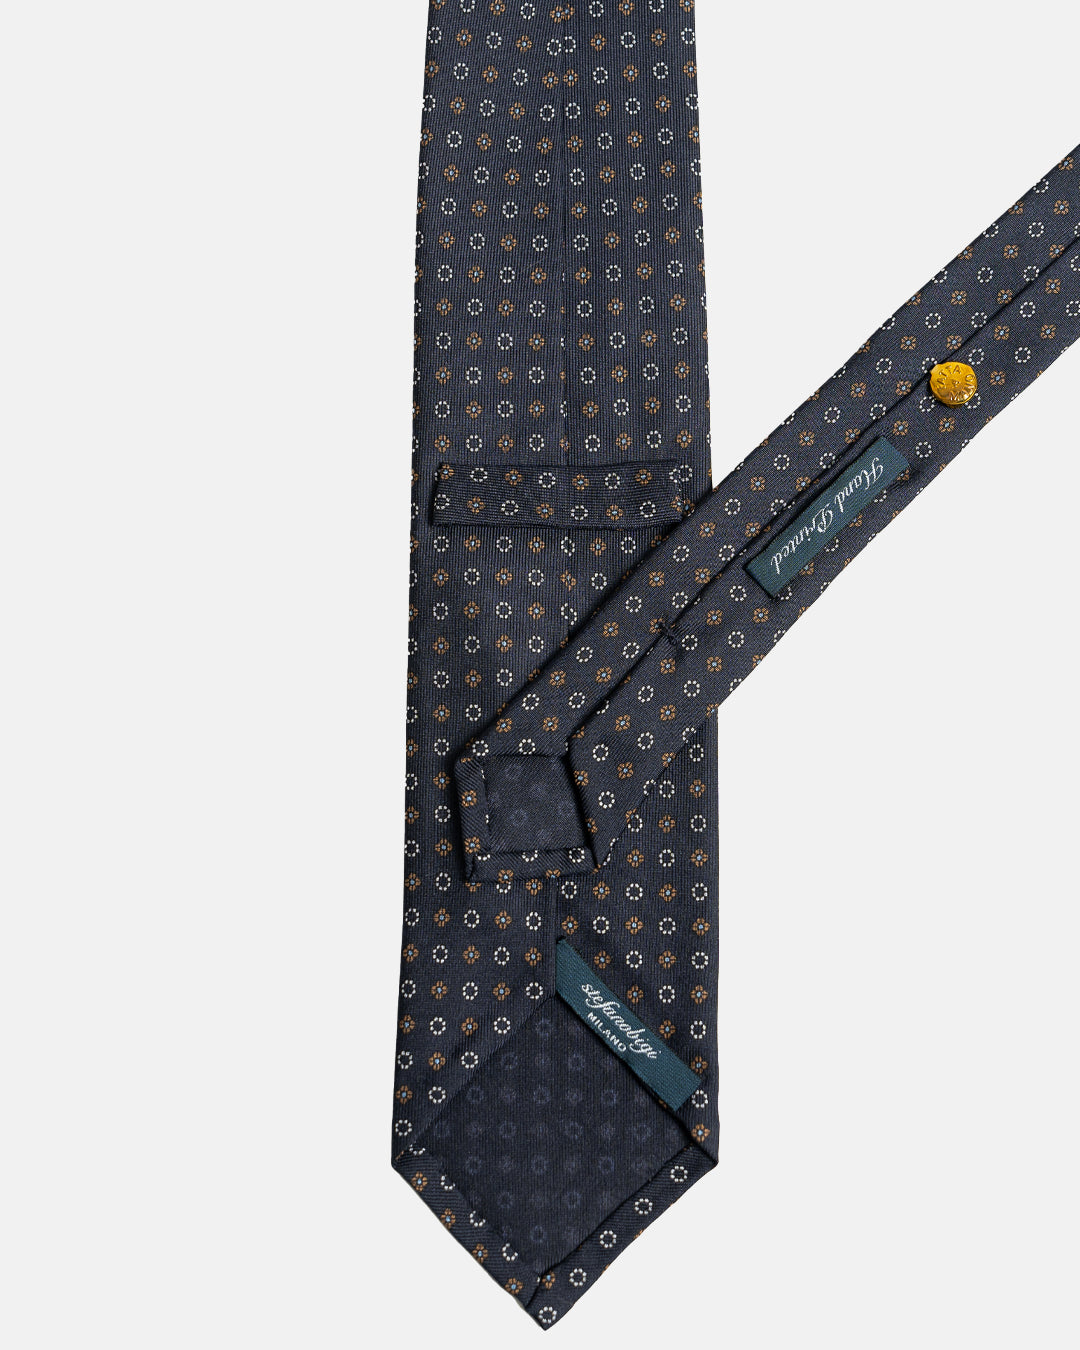 Bigi Cravatte Navy/Brown Floral Printed Tie